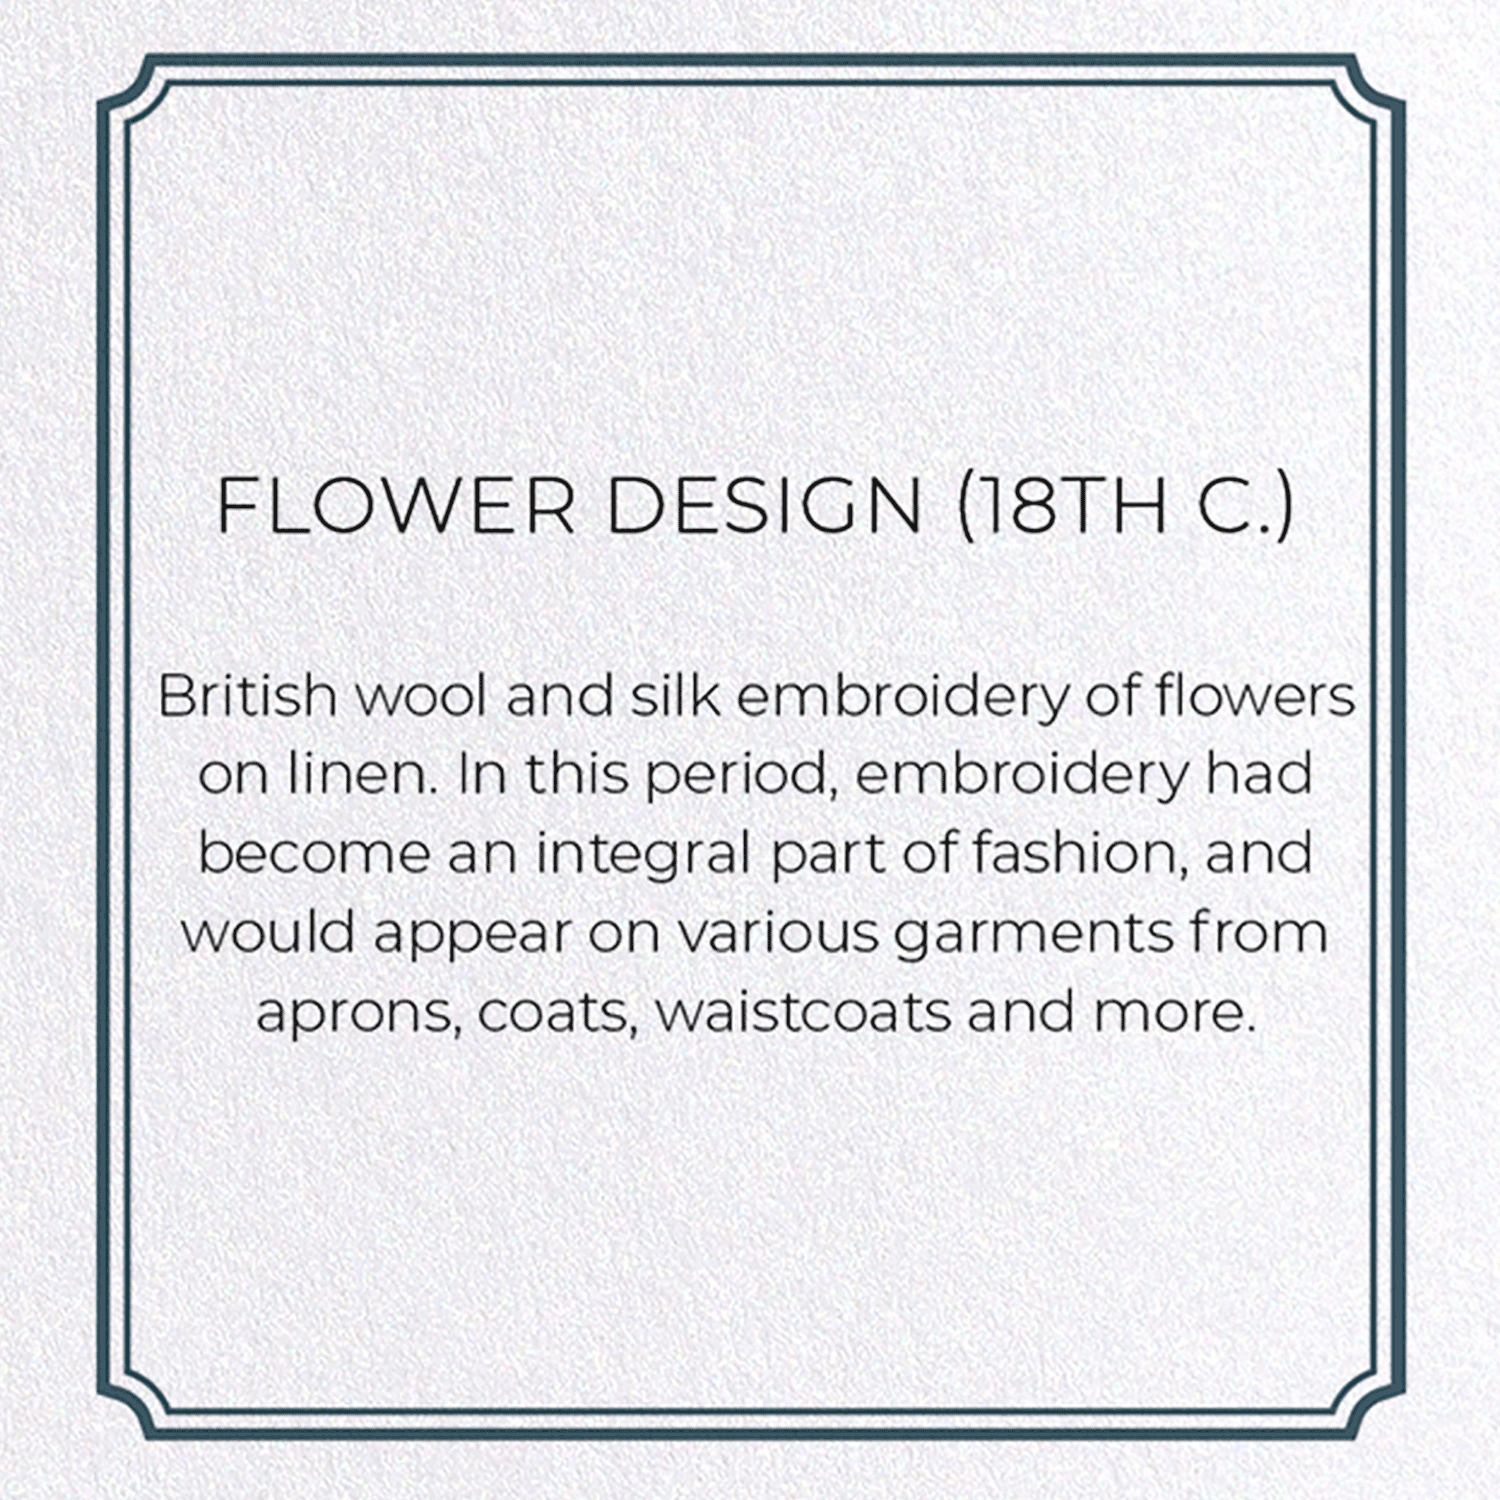 FLOWER DESIGN (18TH C.)